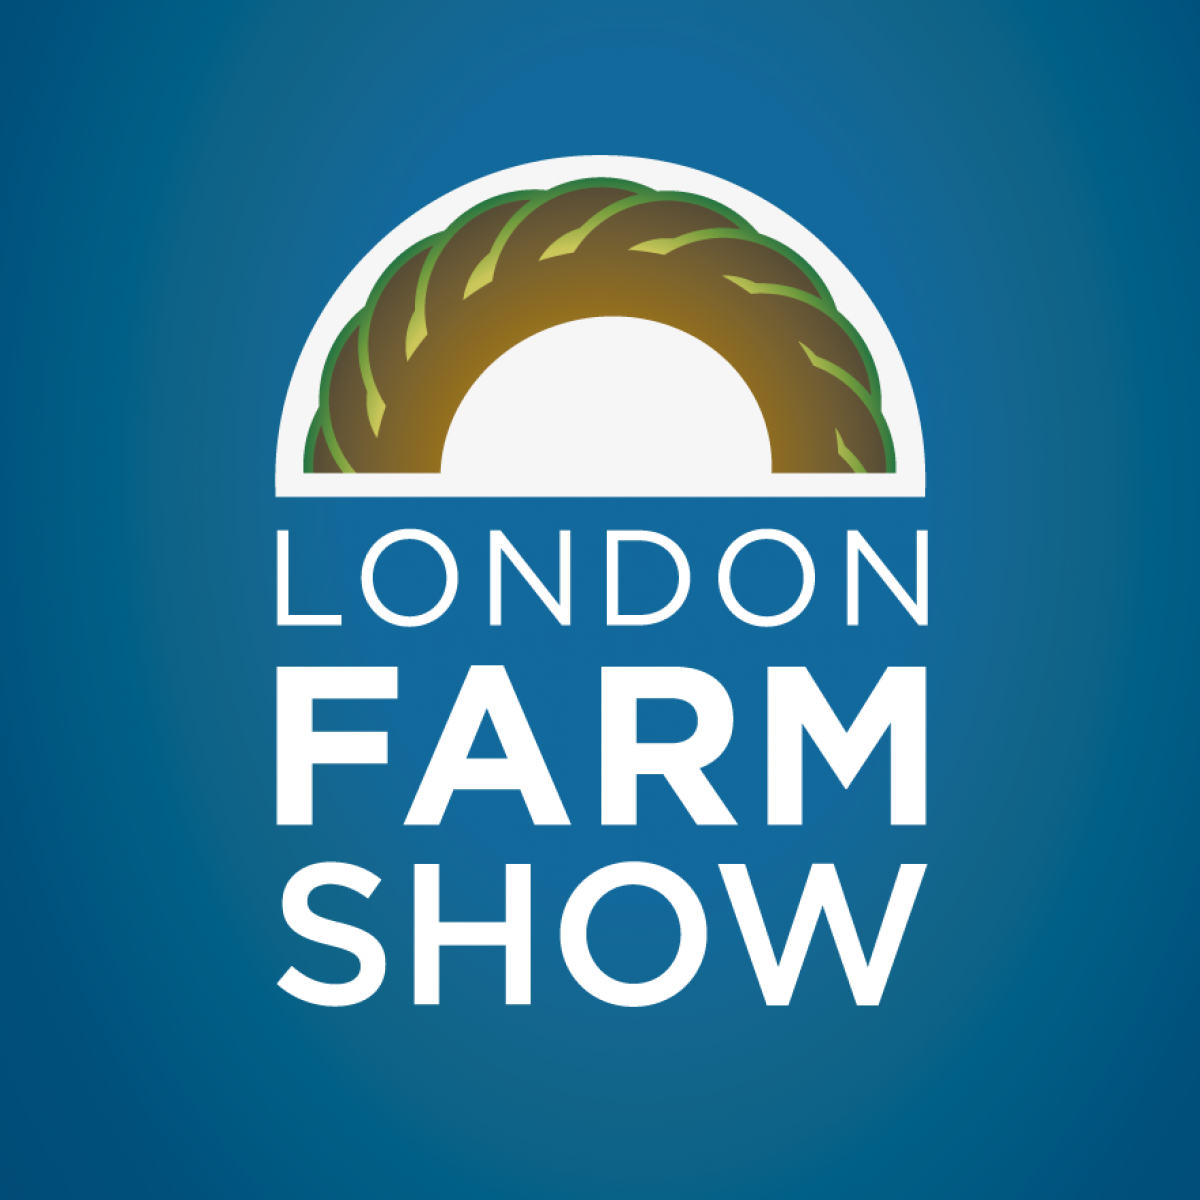 London Farm Show logo